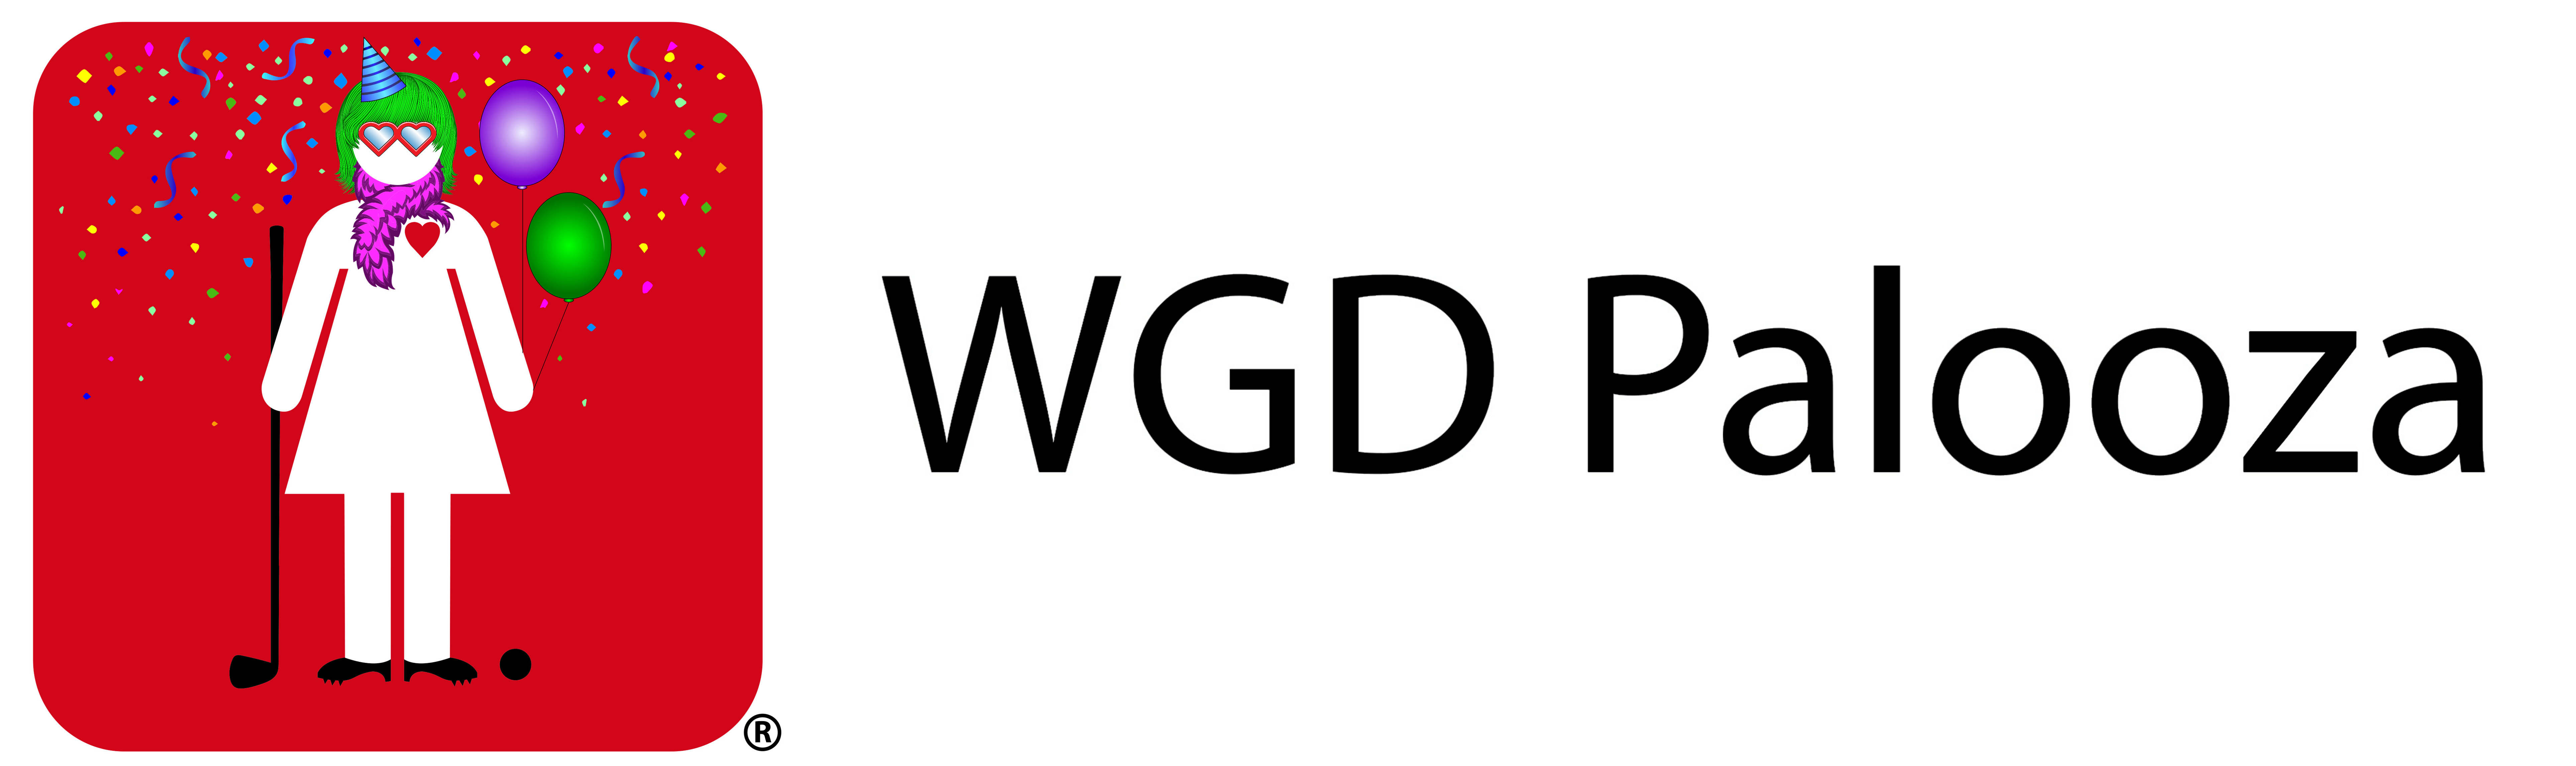 WGD-PALOOZA-horizontal-logo